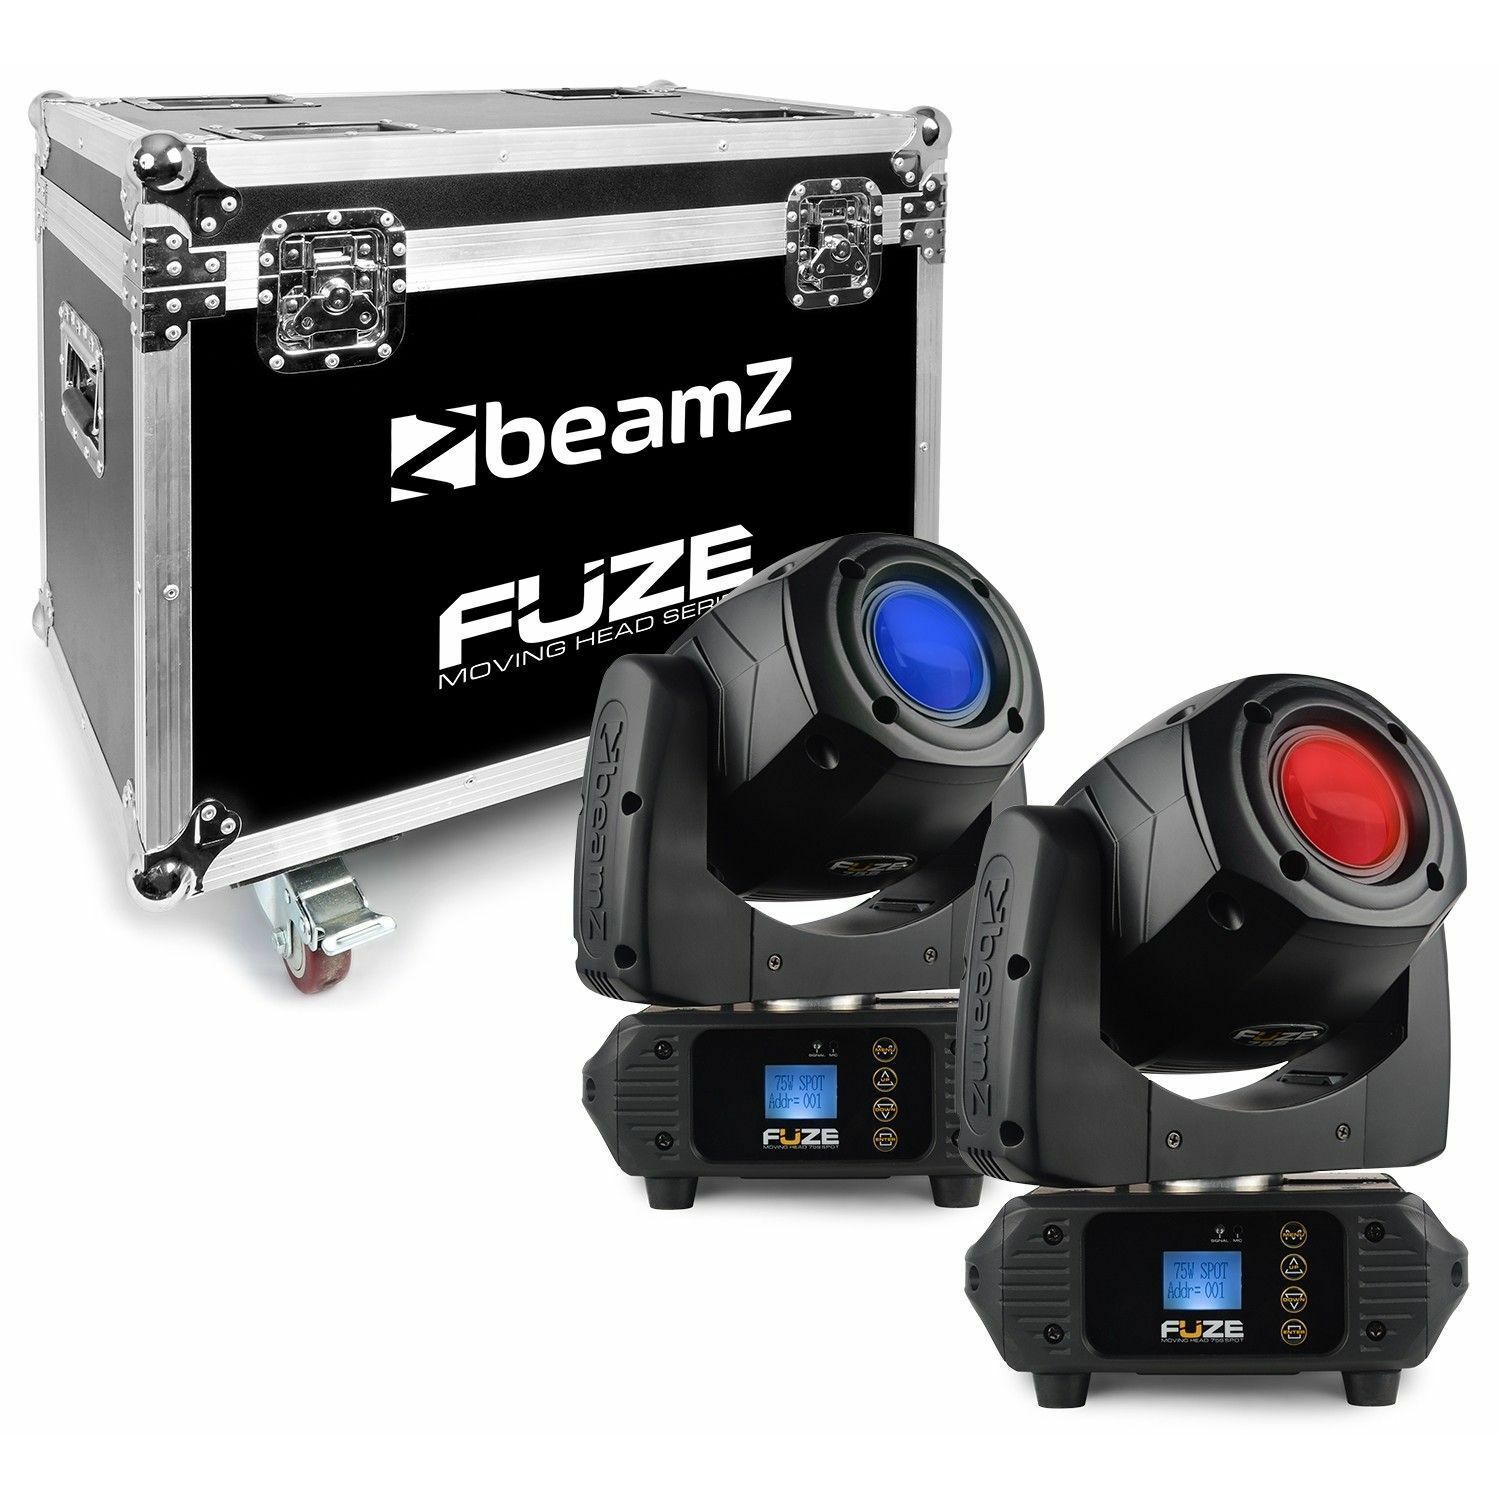 Retourdeal - BeamZ FUZE75S Spot set van 2 moving heads in Flightcase